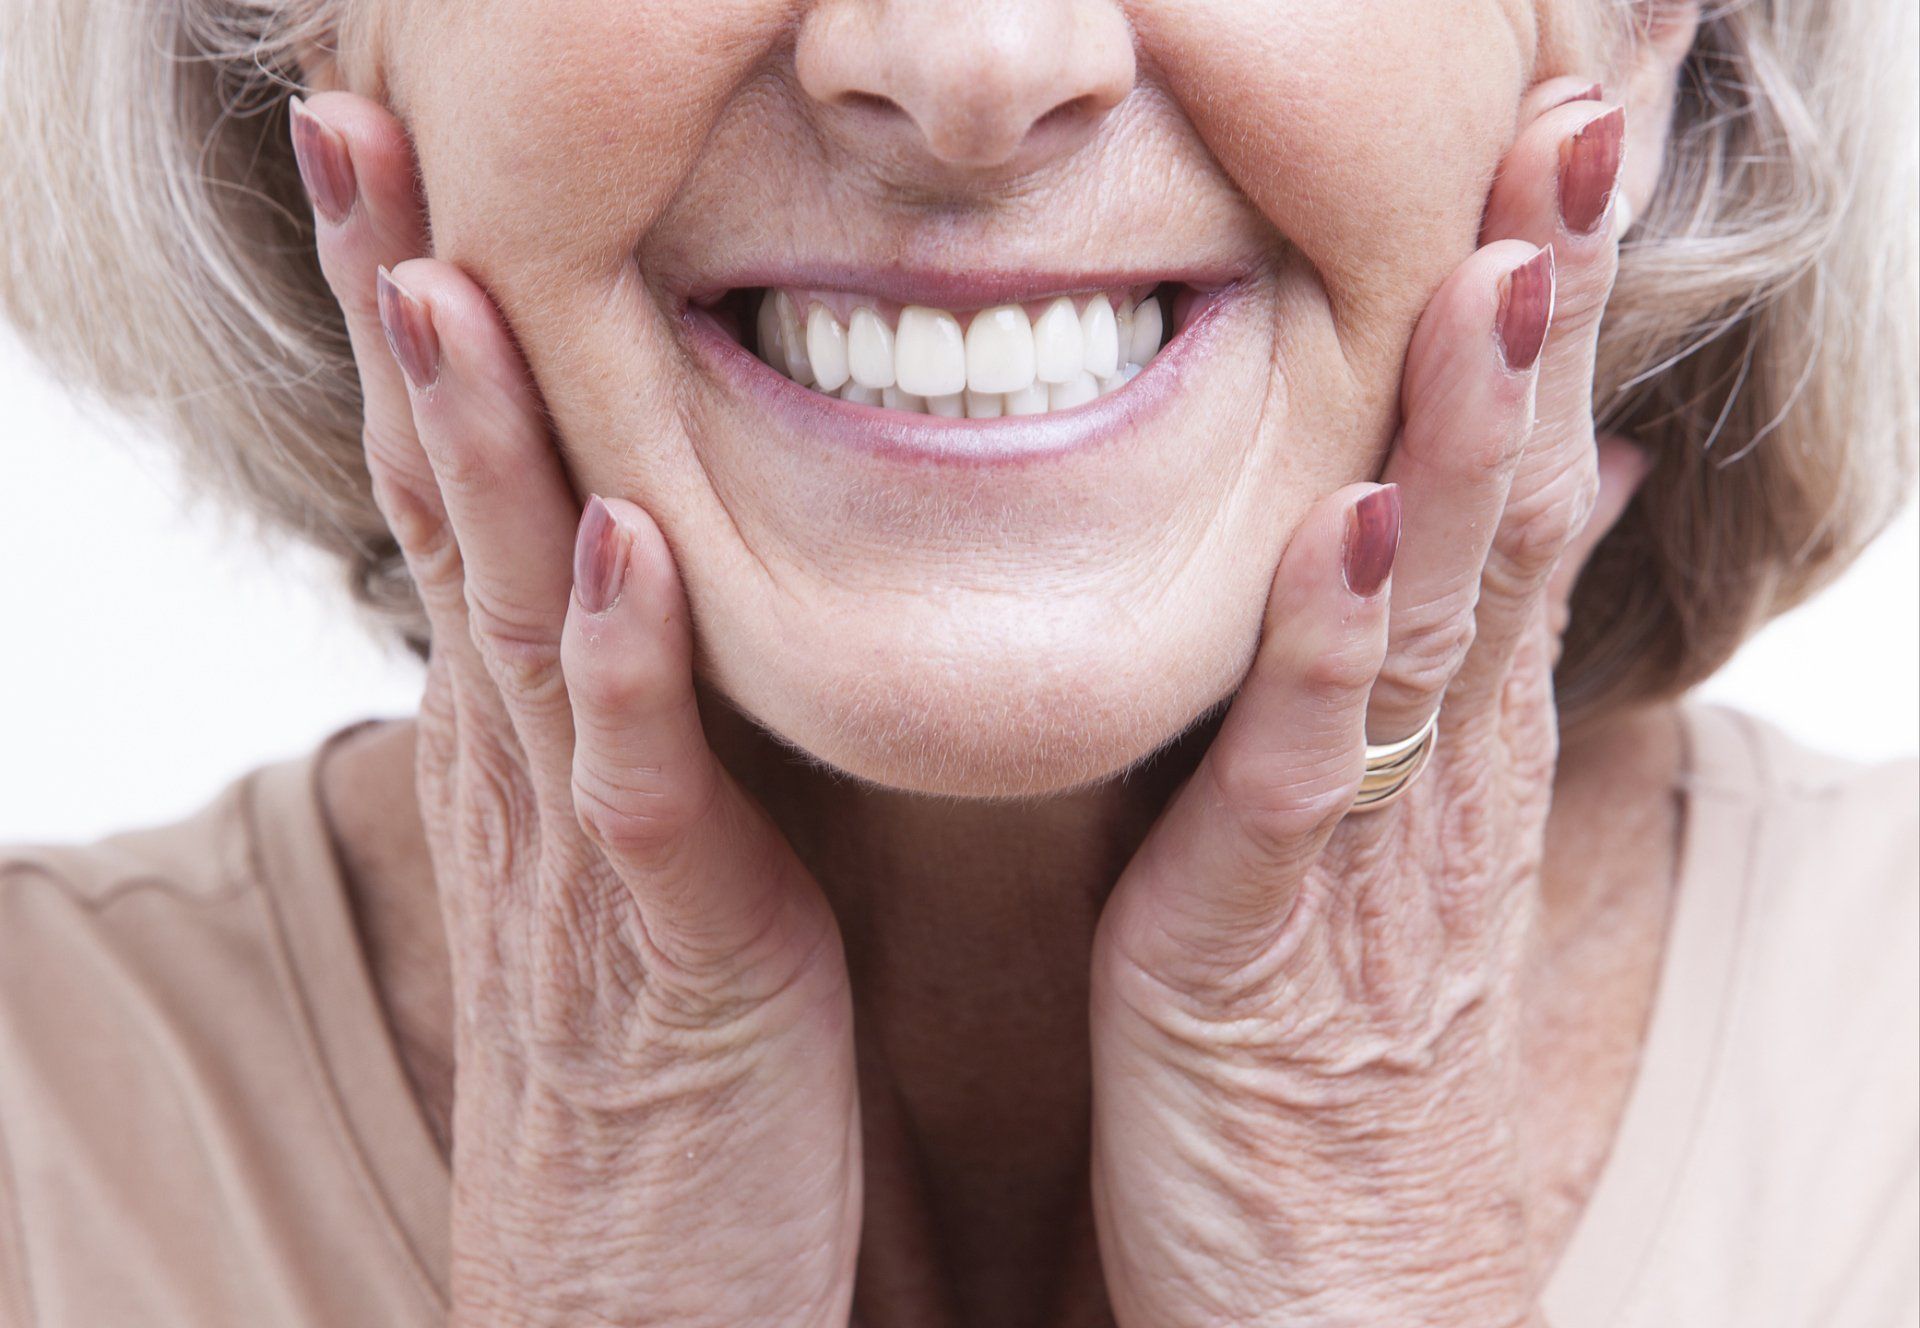 Dental Implant — Senior Woman Smile with New False Teeth in Baker, LA